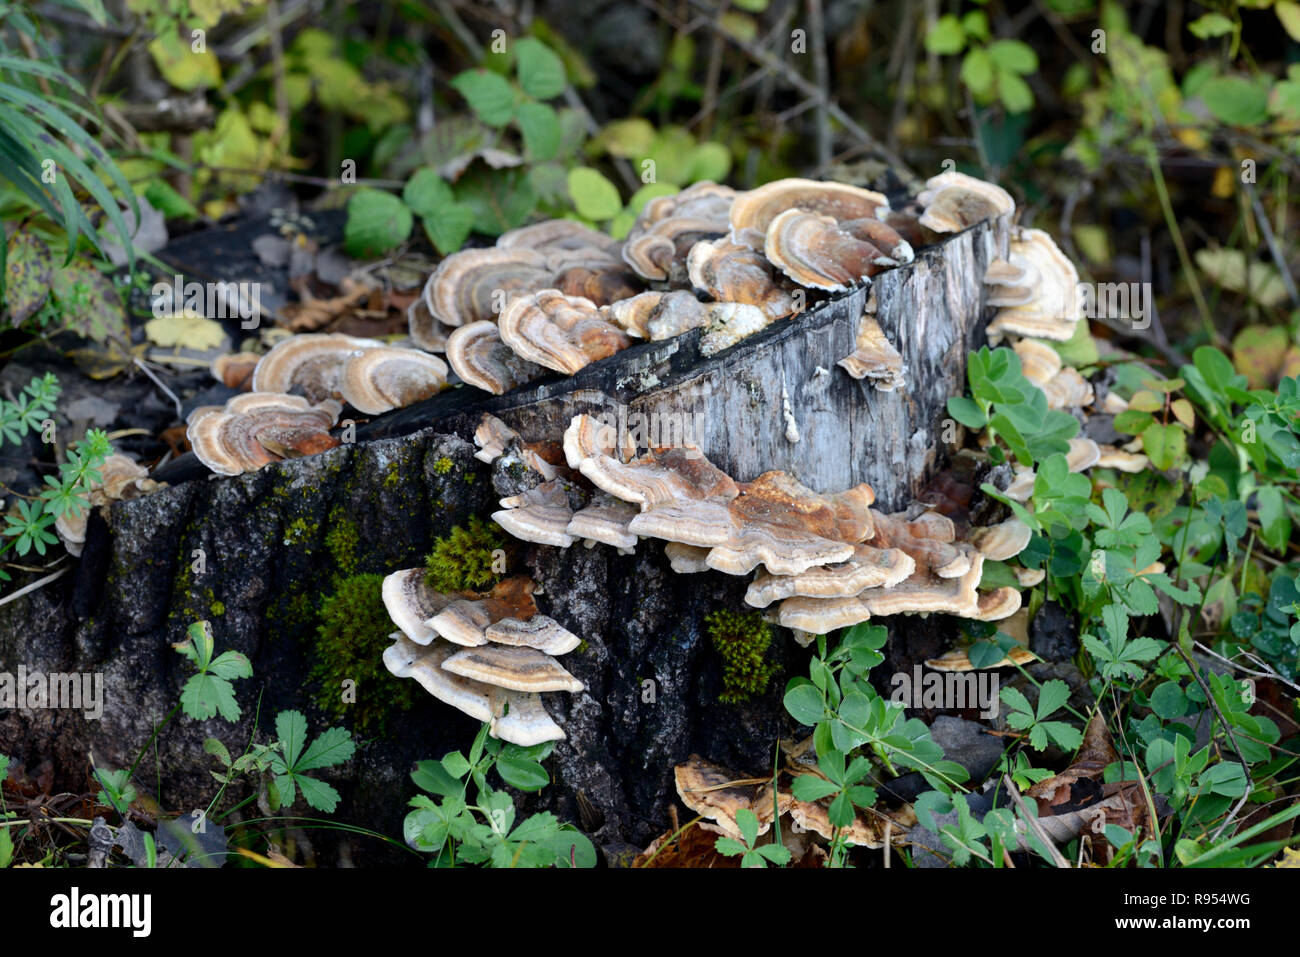 Brown Bracket Fungi or Shelf Fungi, Trametes versicolor aka Coriolus versicolor or Polyporus versicolor, a Polypore Mushroom Growing on Tree Stump Stock Photo